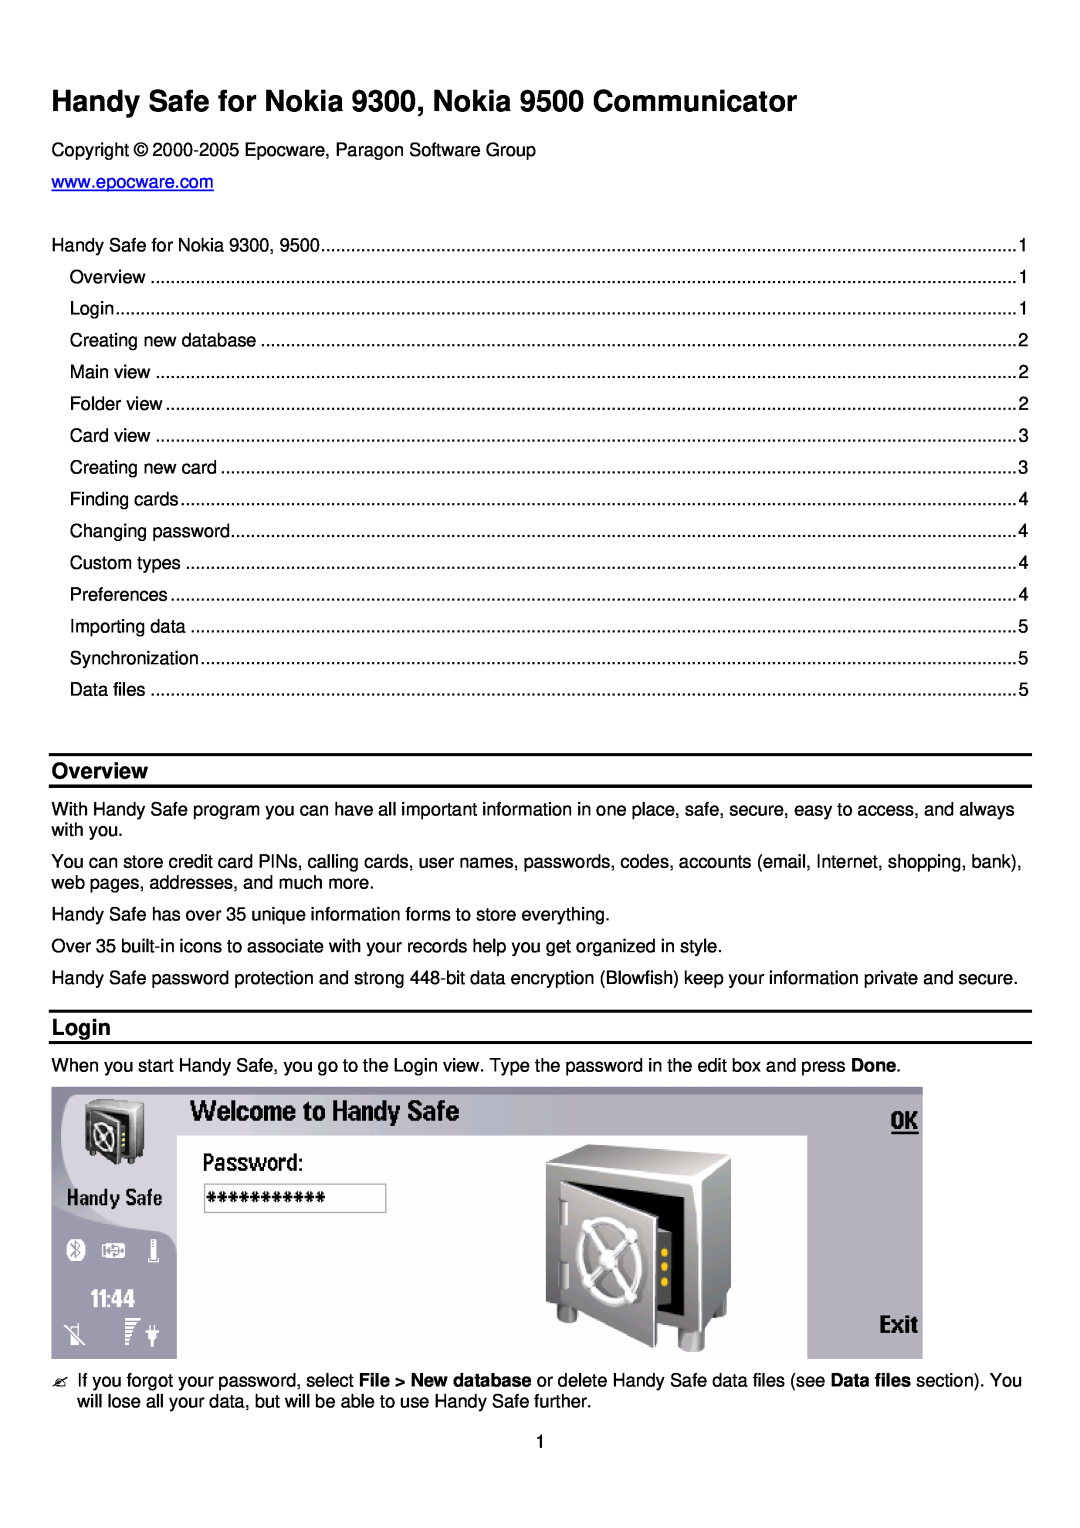 Nokia 9300, 9500, Handy Safe for Nokia Communicator manual Overview, Login 